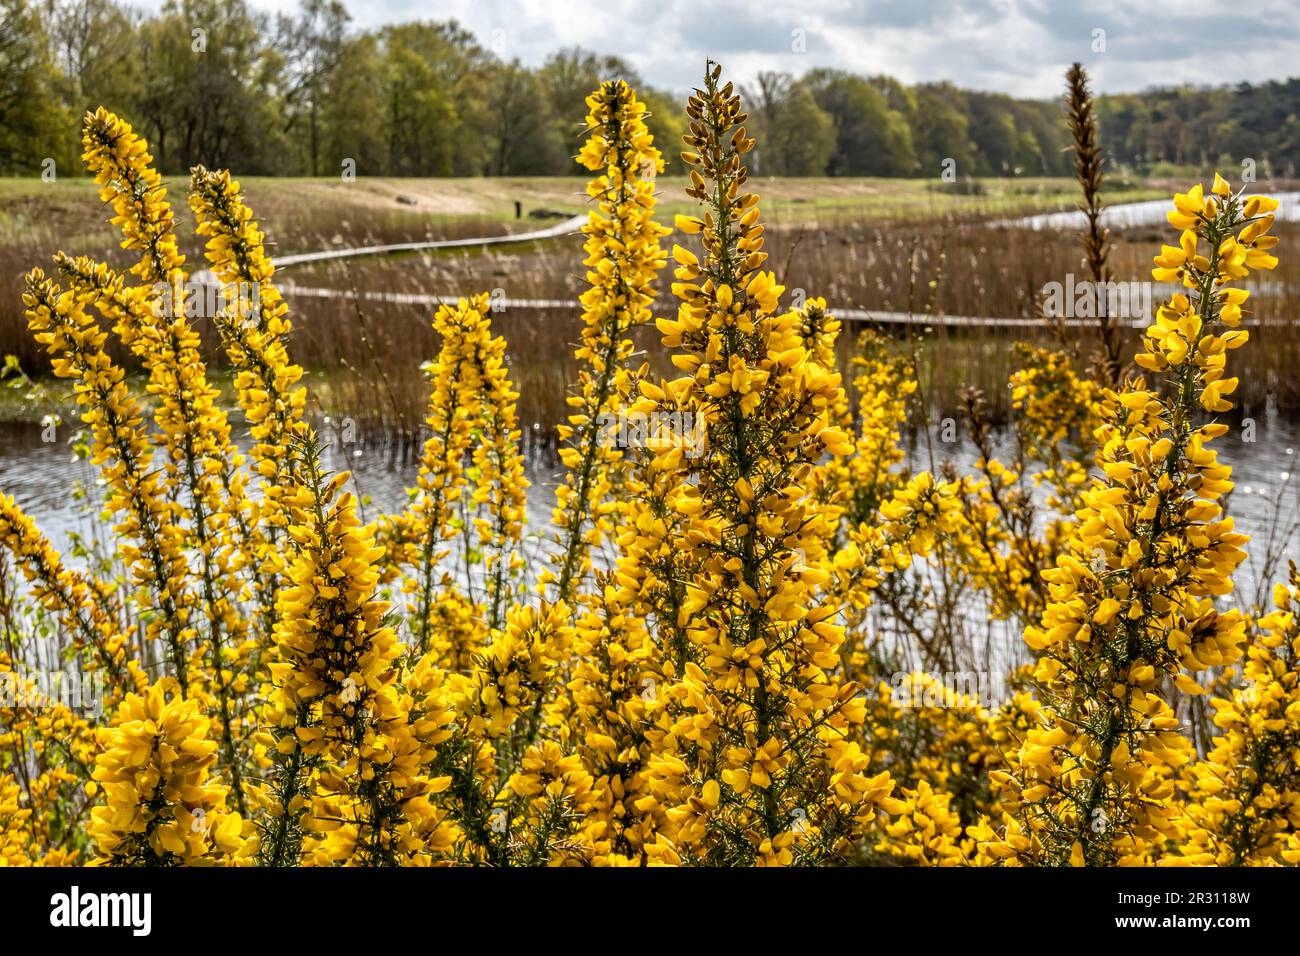 Gorse, Ulex europaeus, with yellow flowers and boardwalk in wetland Zanderij Crailo, Hilversum, Netherlands Stock Photo